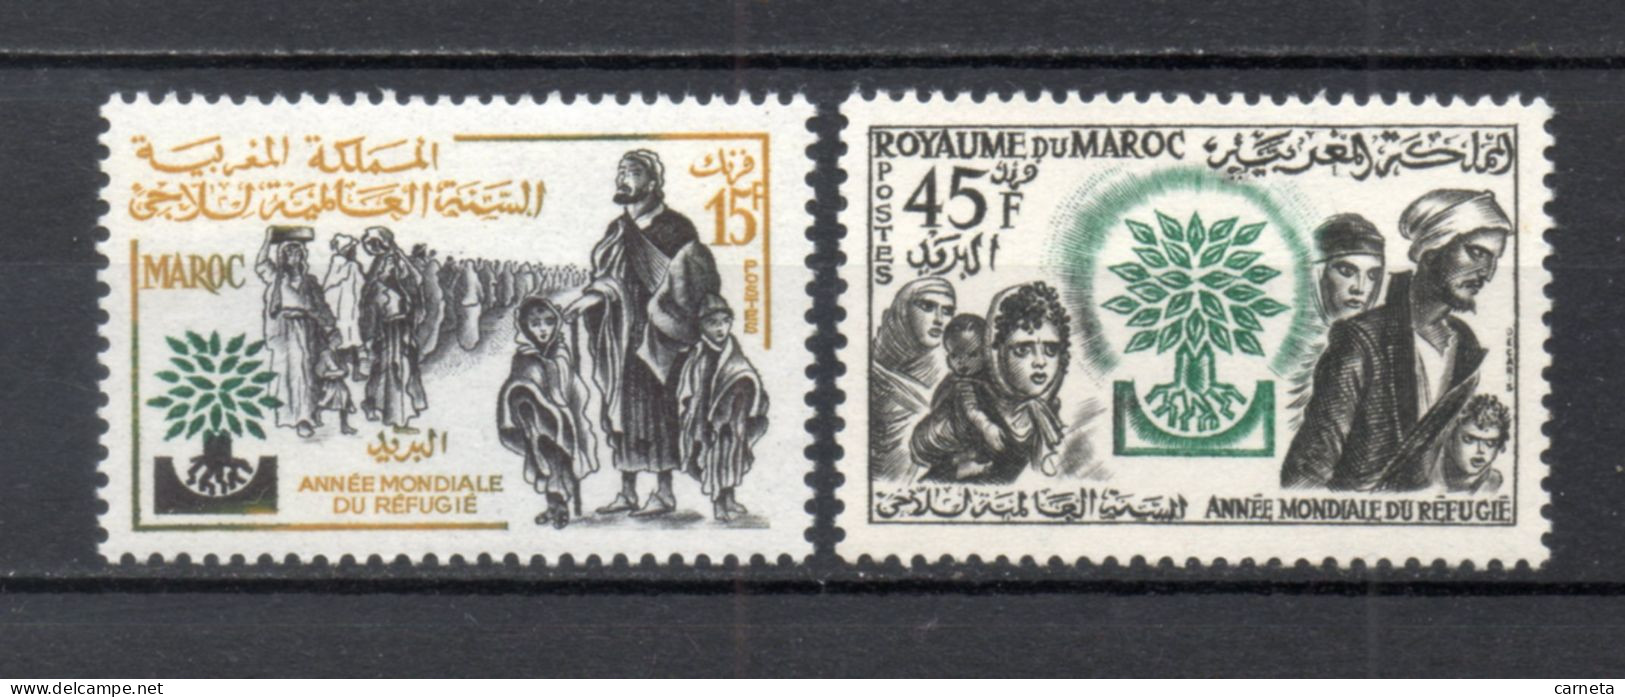 MAROC N°  402 + 403    NEUFS SANS CHARNIERE  COTE 2.00€    ANNEE DU REFUGIE - Marokko (1956-...)